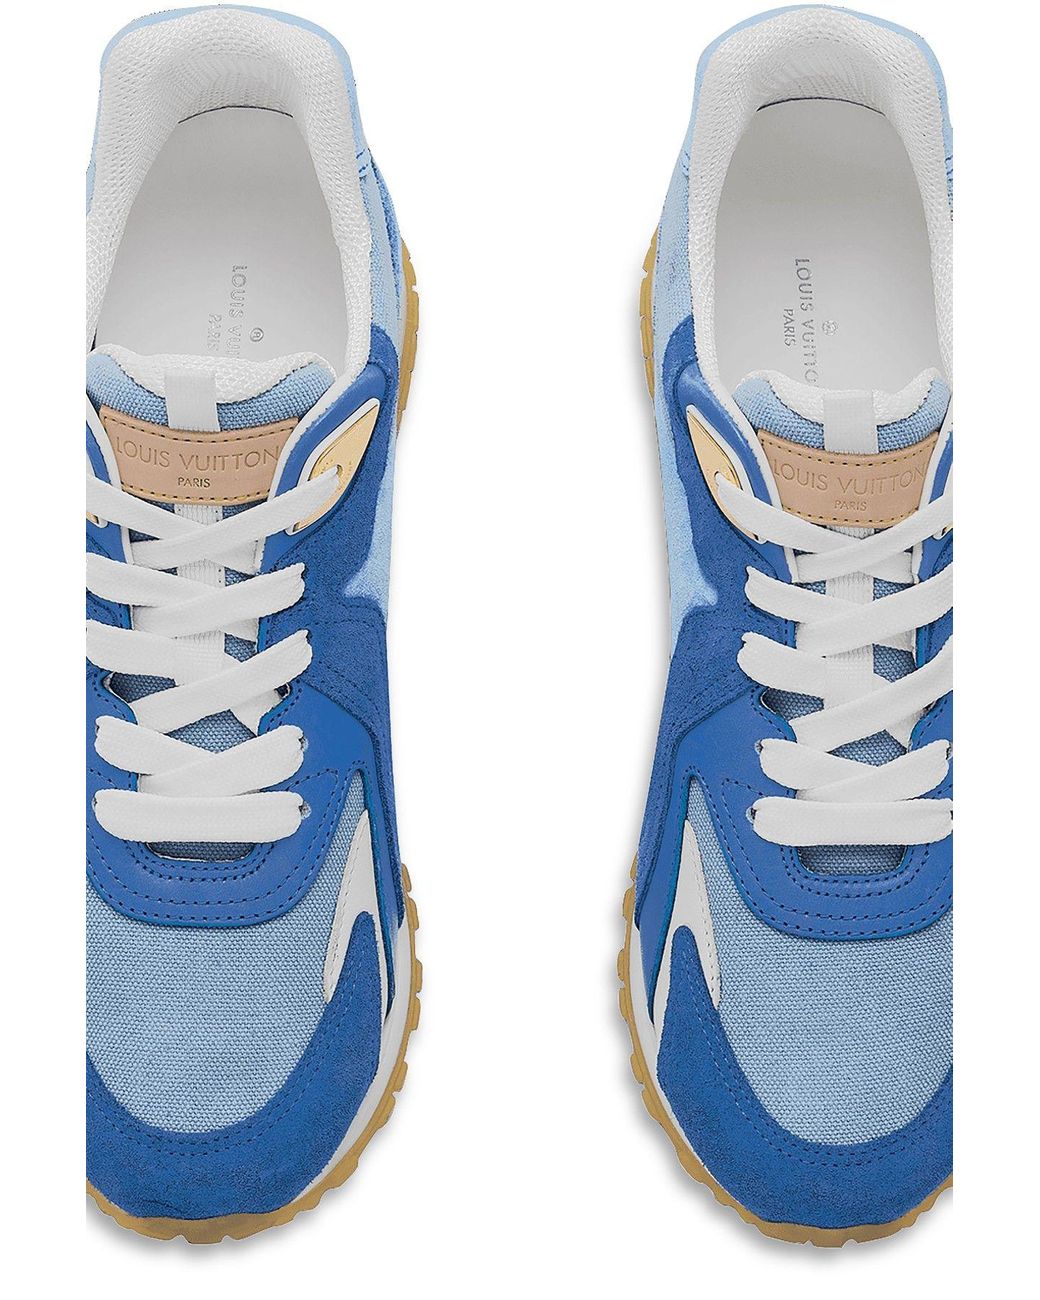 LOUIS VUITTON Calfskin Suede Damier Run Away Sneakers 10 Blue